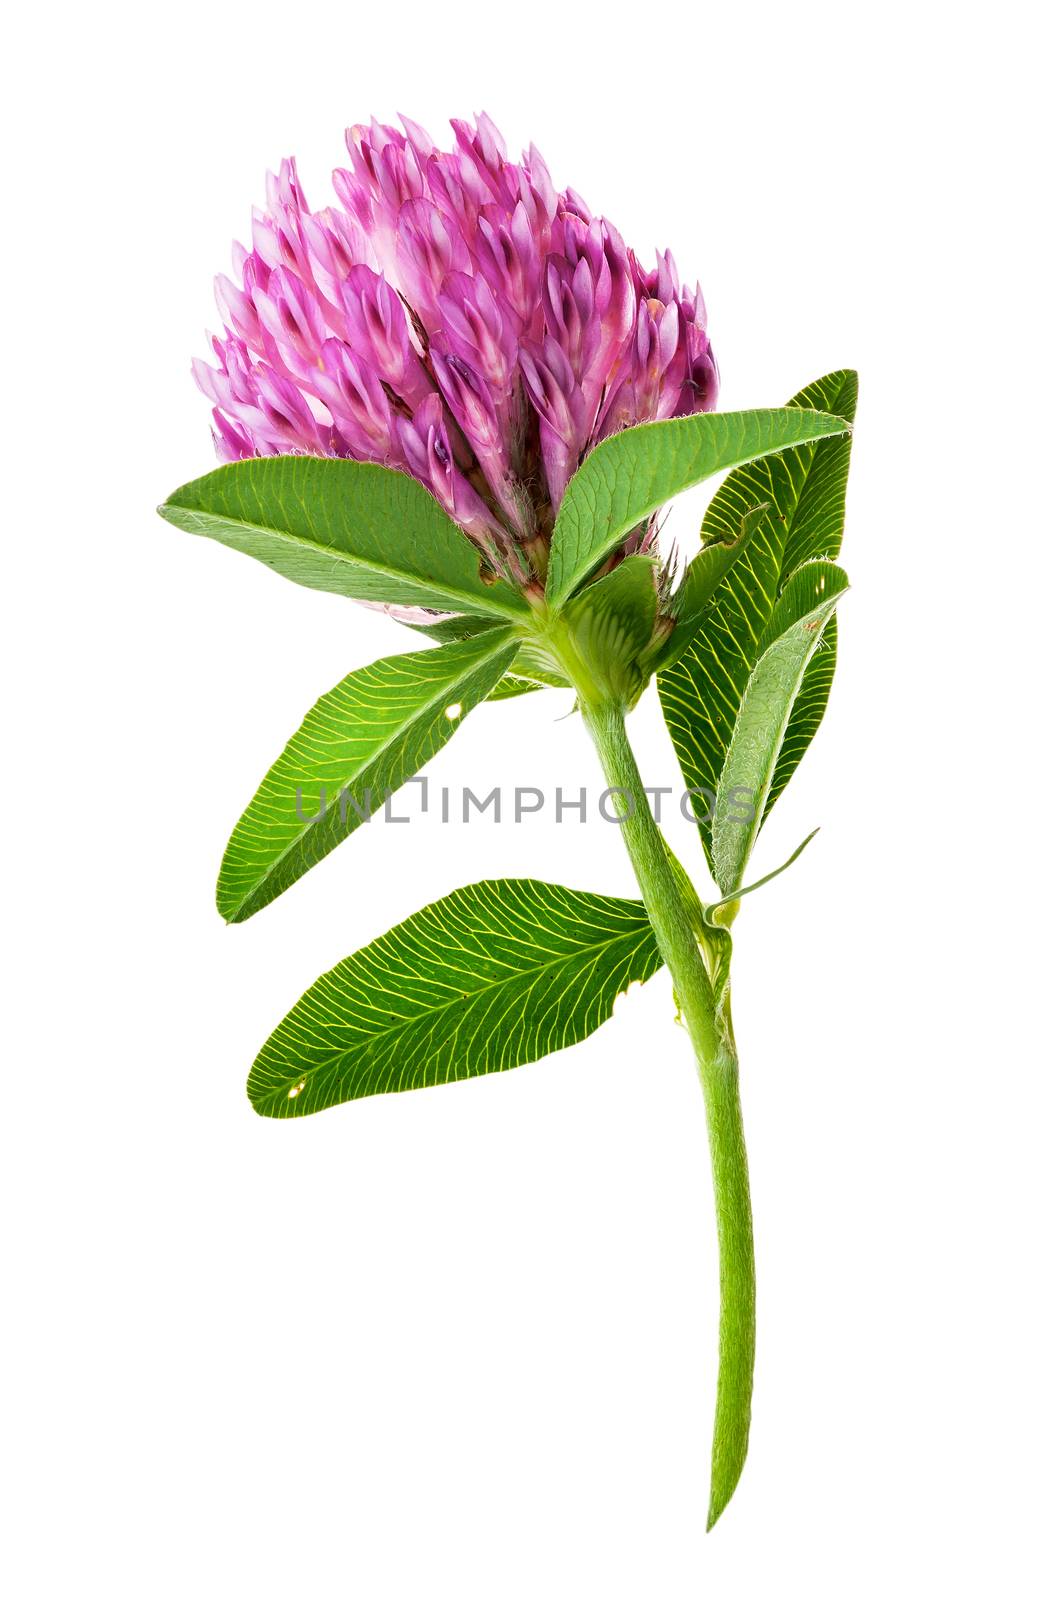 Single clover flower vertically by Cipariss